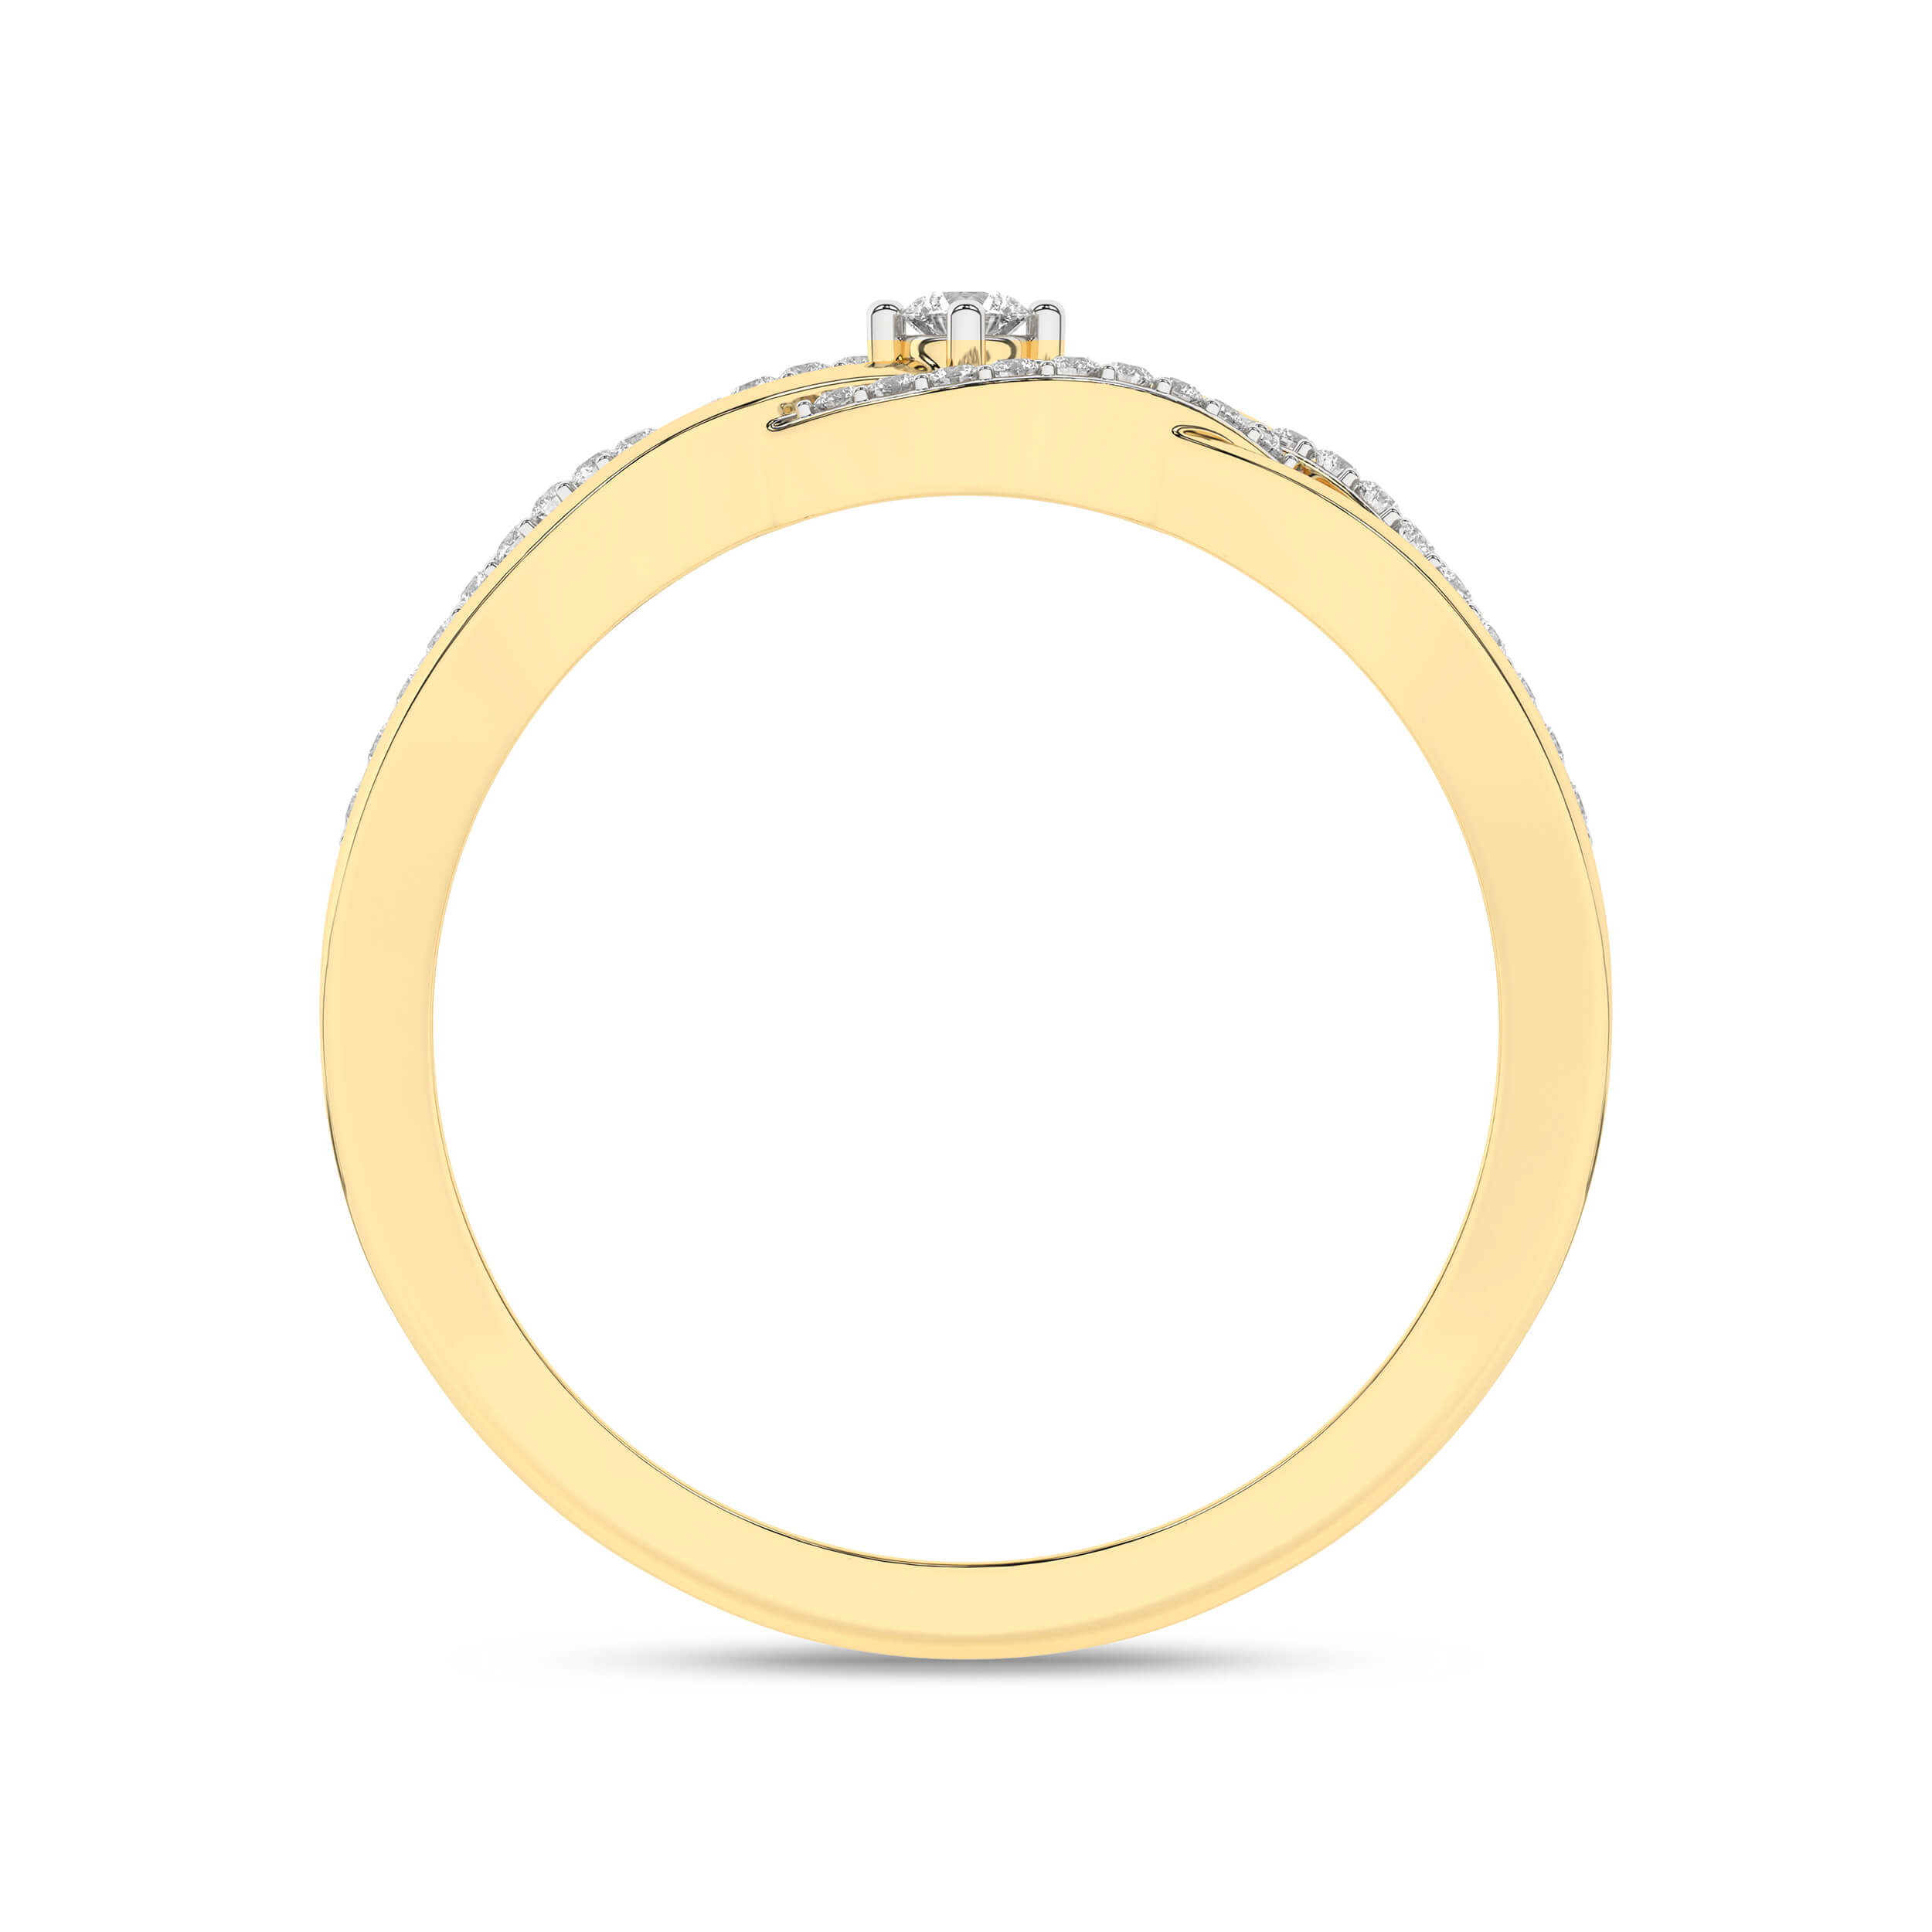 Inel din Aur Galben 14K cu Diamante 0.15Ct, articol RF18151, previzualizare foto 1